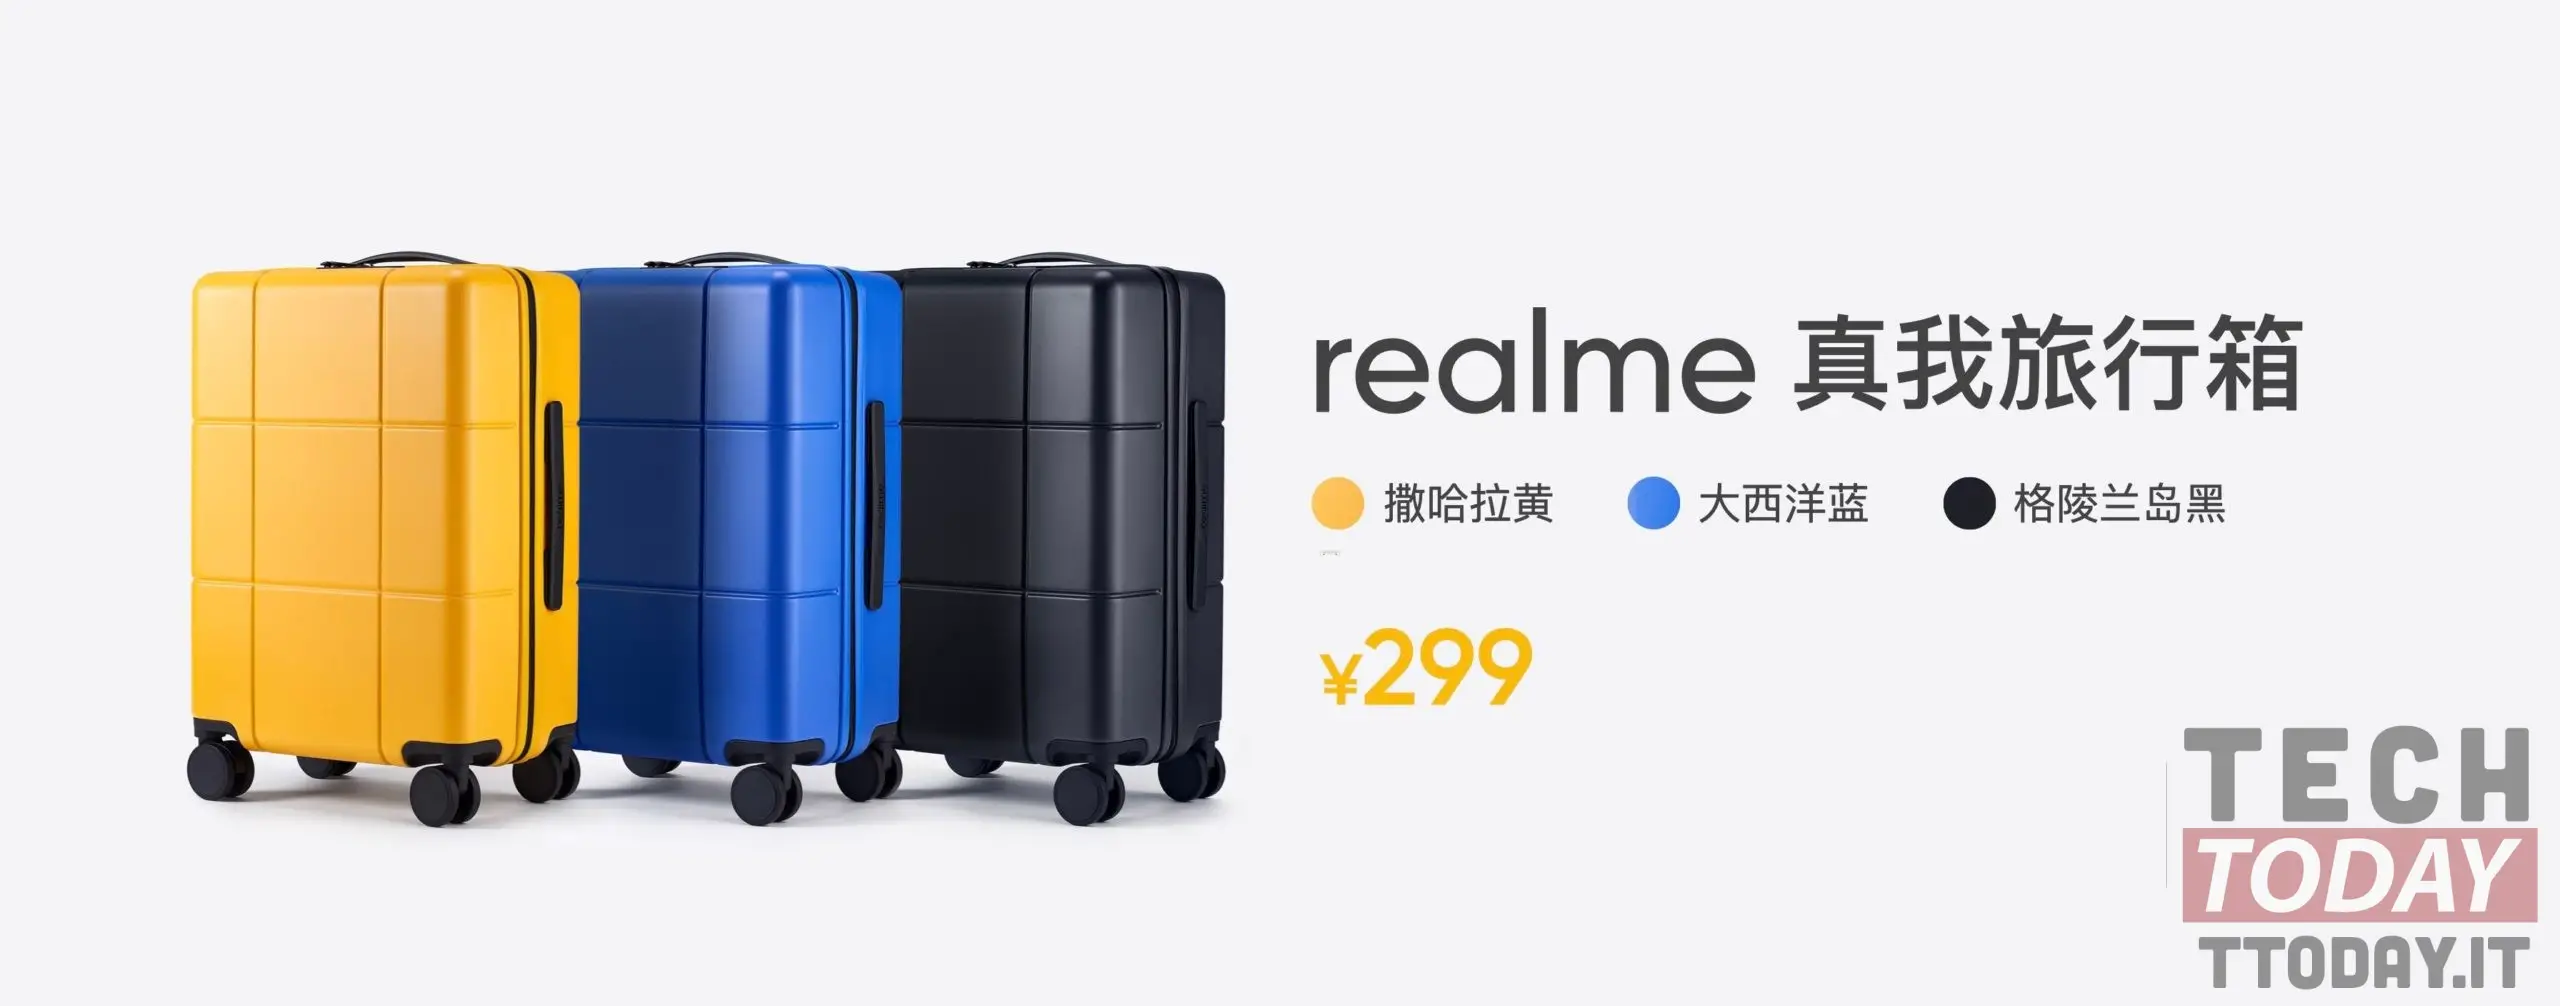 realme सूटकेस